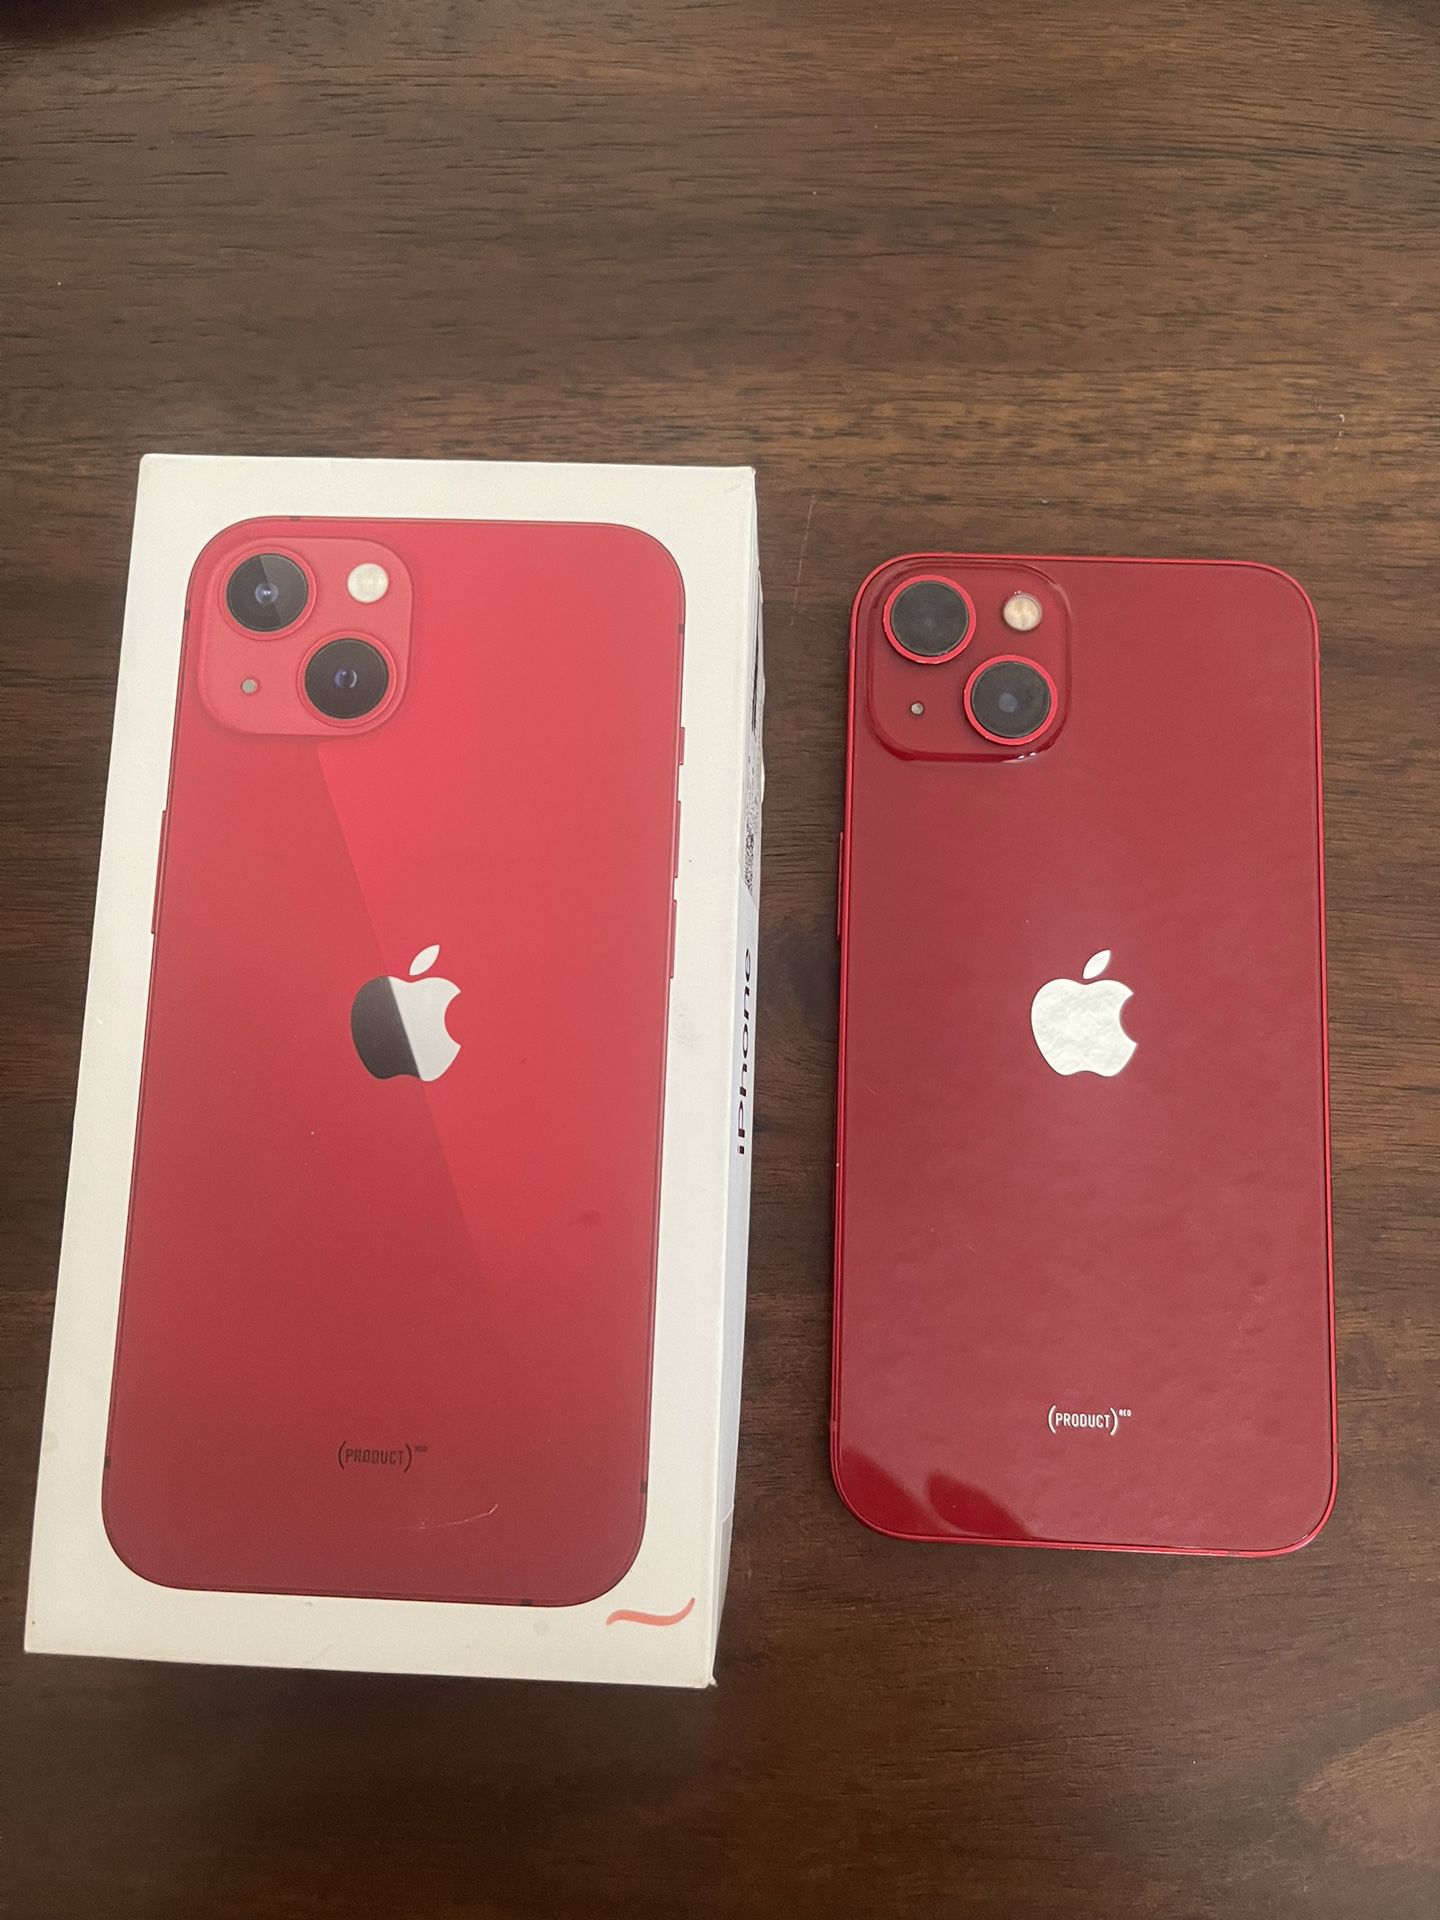 iPhone 13 Unlocked 128g Red